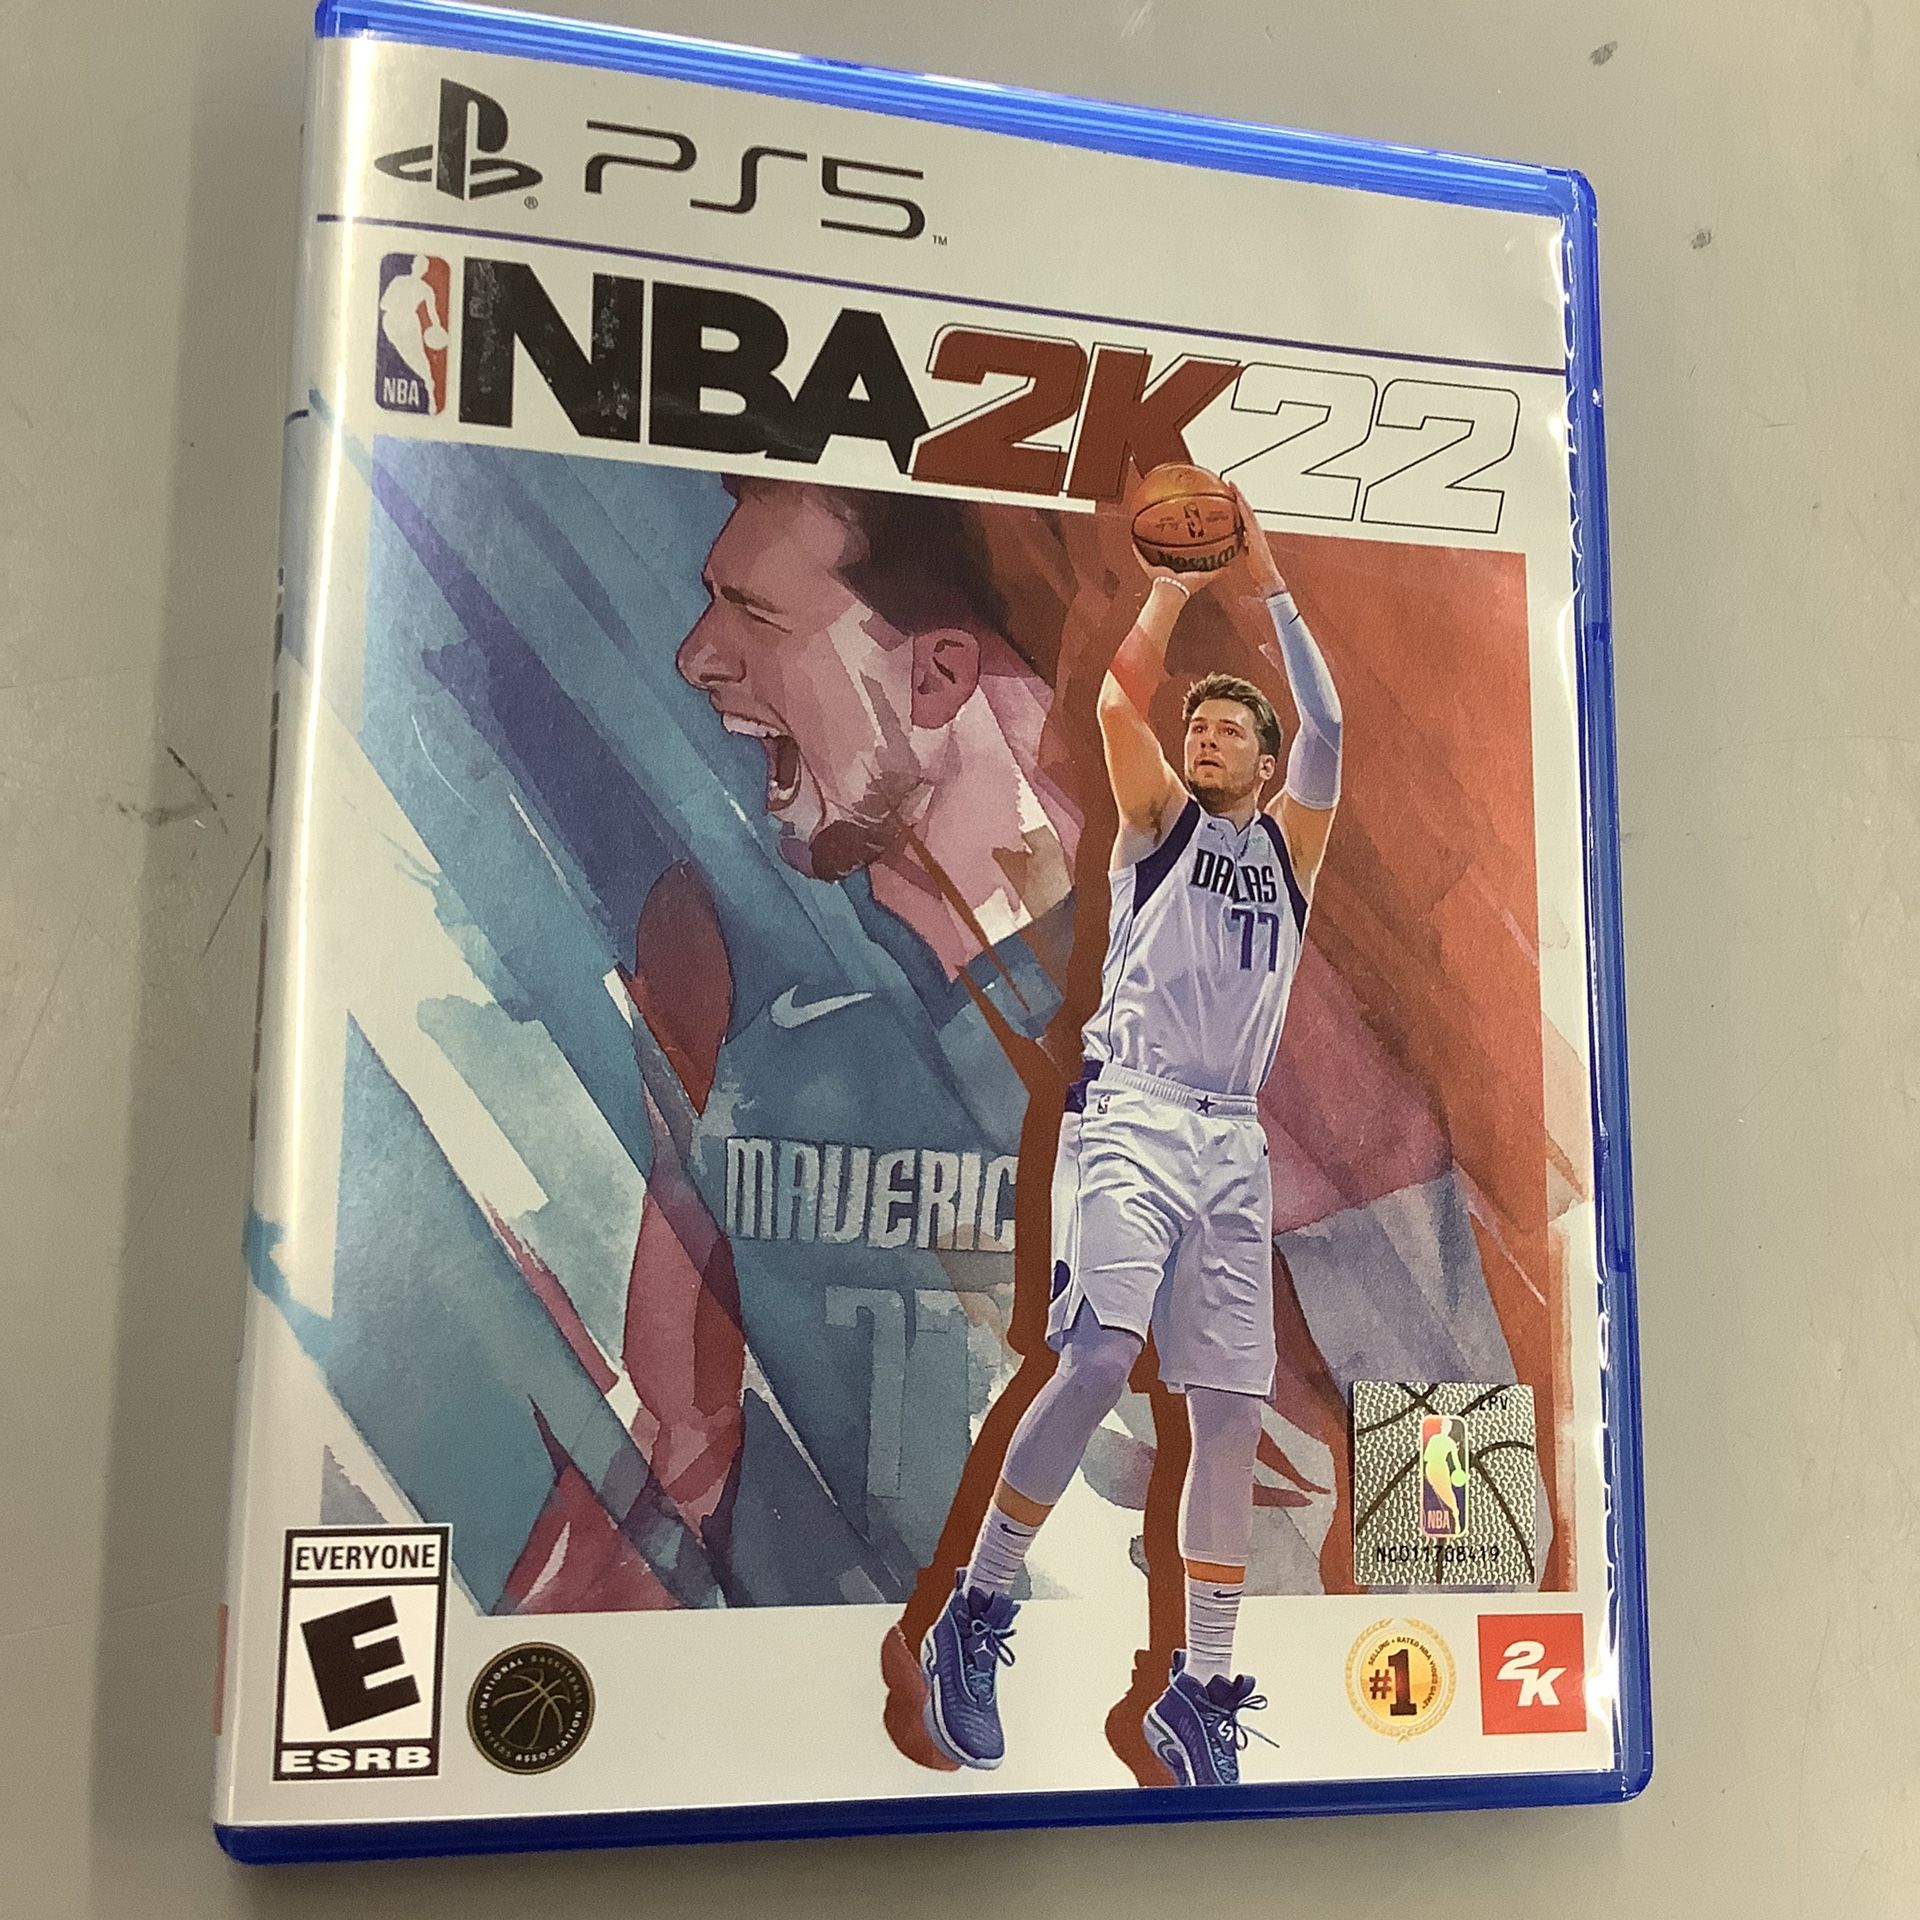 PS5 NBA 2K22 Video Game PlayStation 5